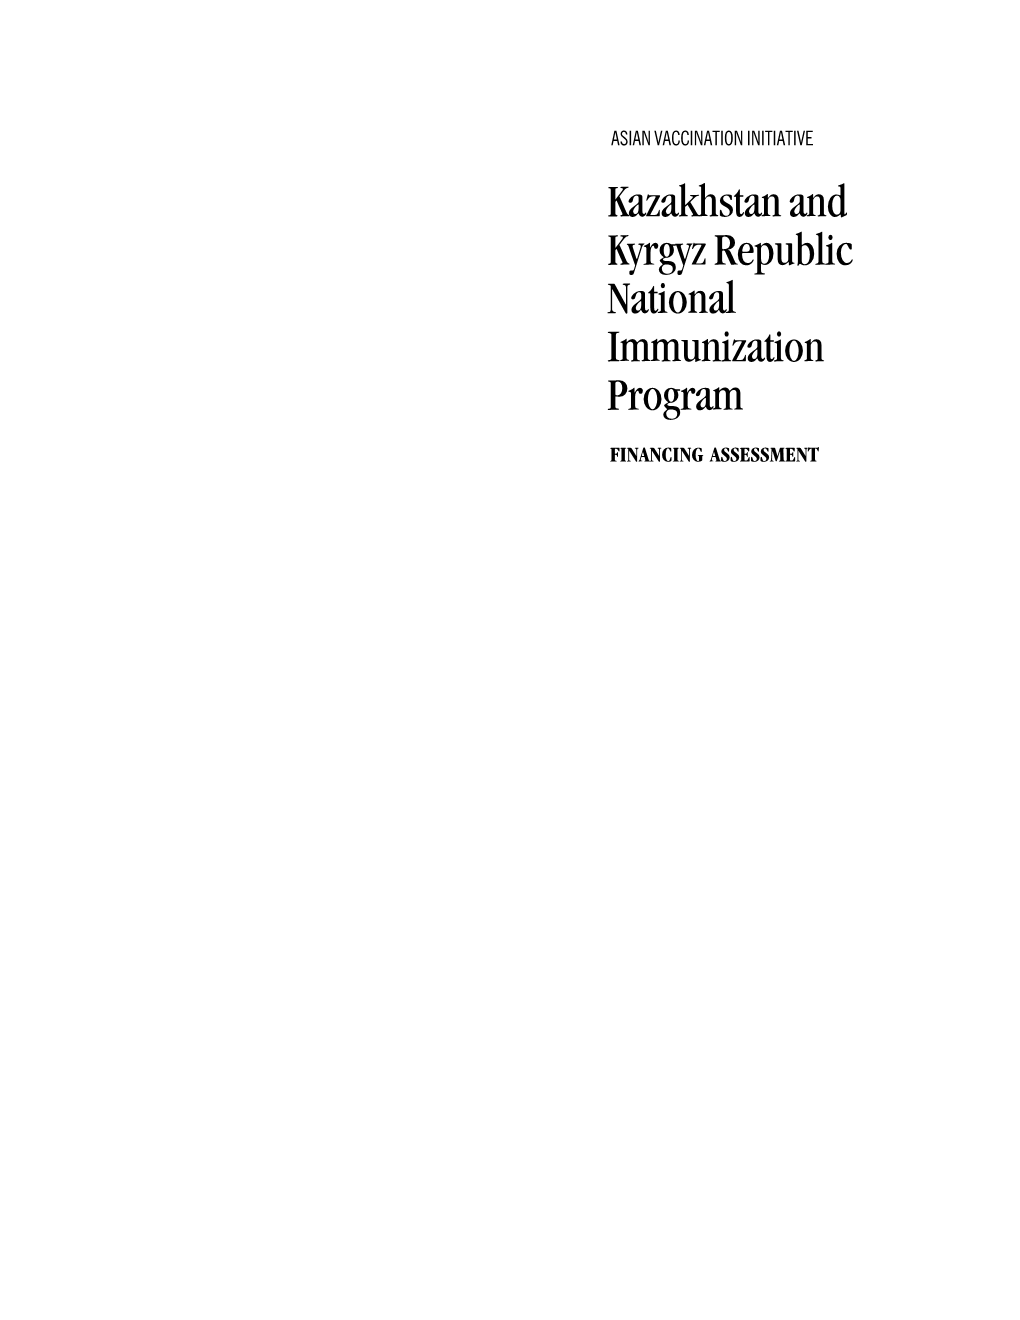 Kazakhstan and Kyrgyz Republic National Immunization Program